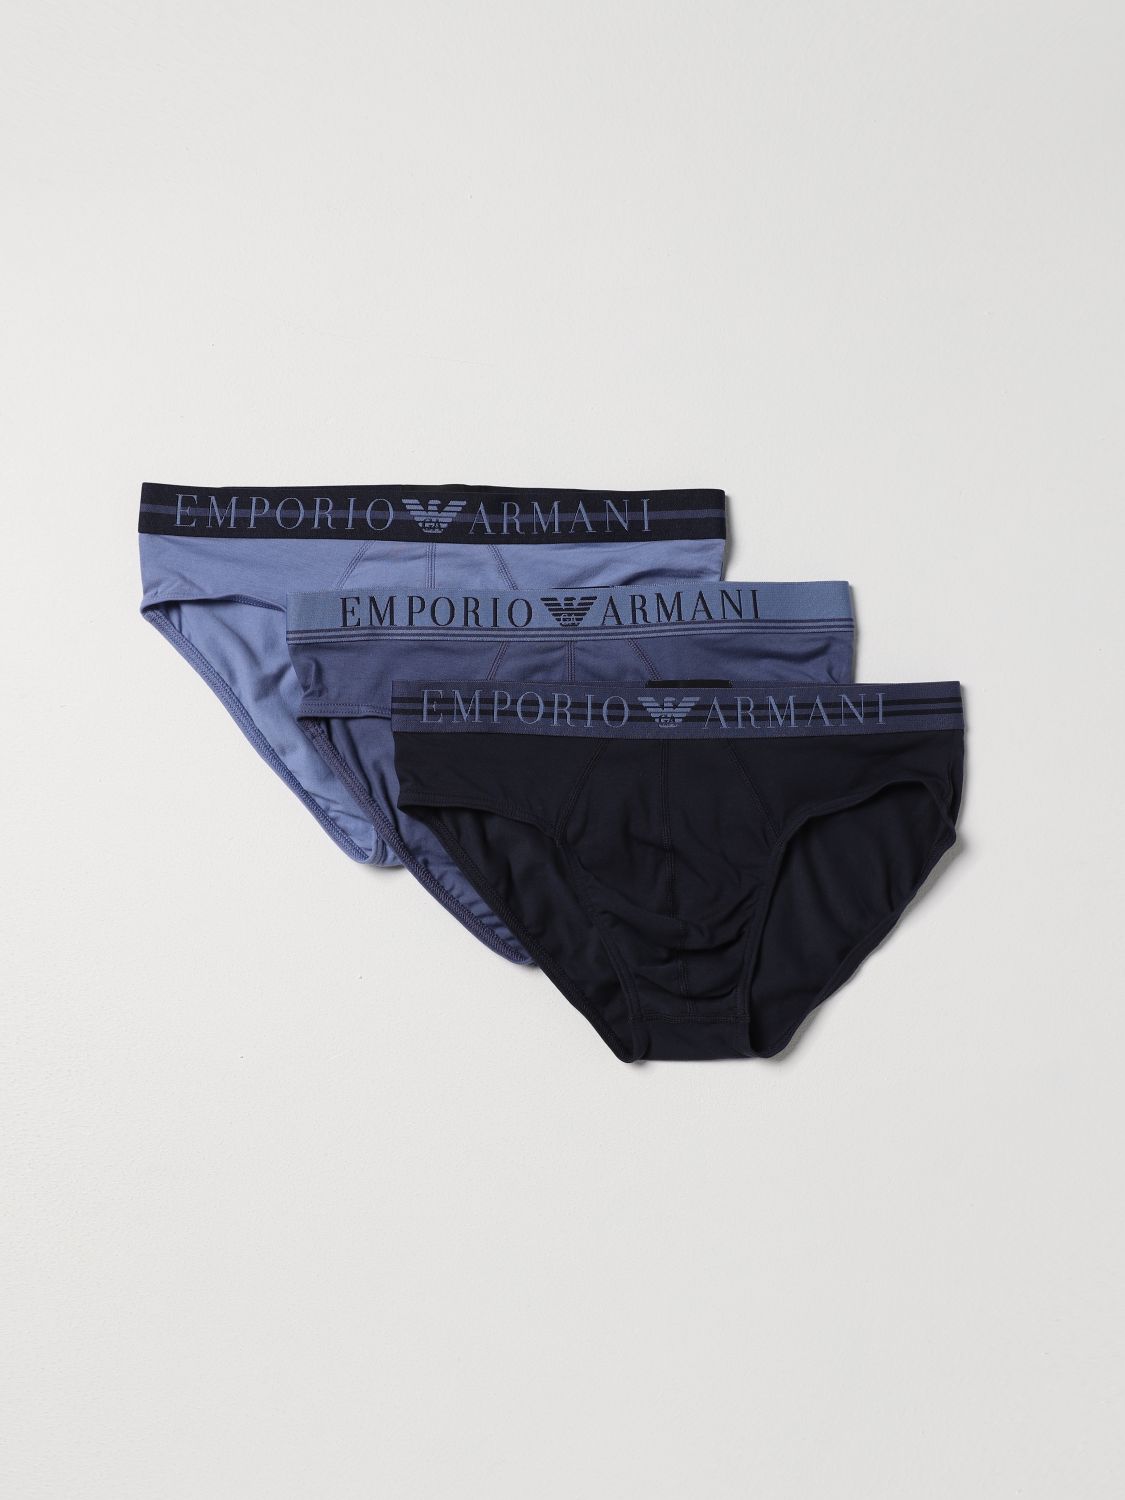 Emporio Armani Underwear Underwear EMPORIO ARMANI UNDERWEAR Men colour Blue